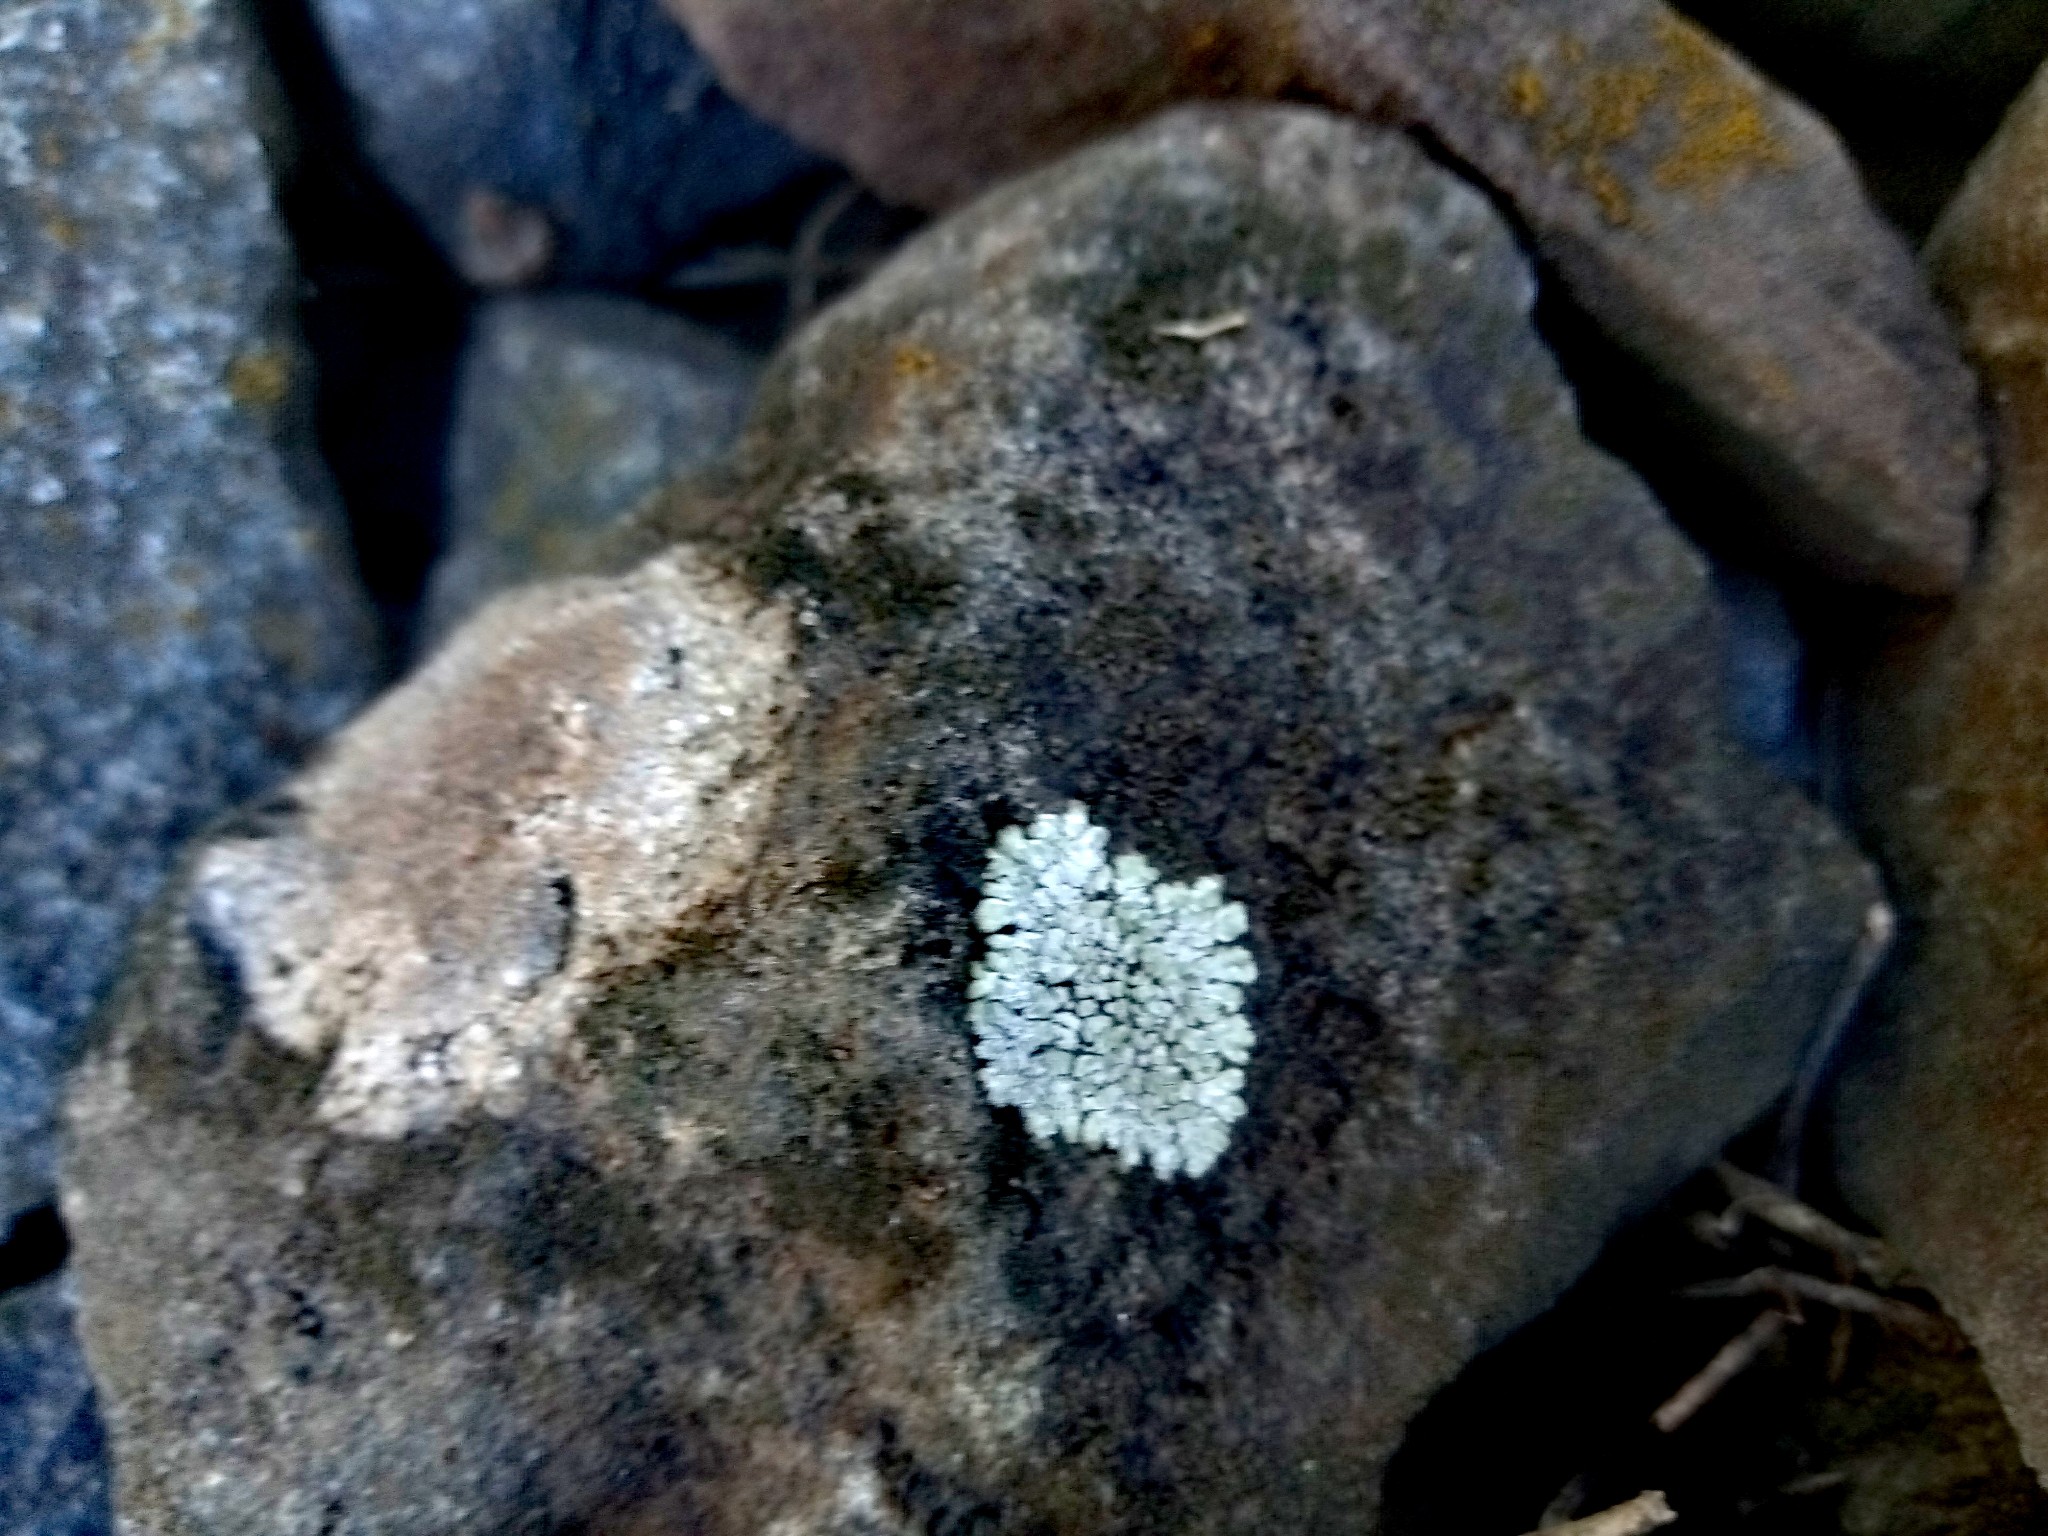 lichens on stones photo 2